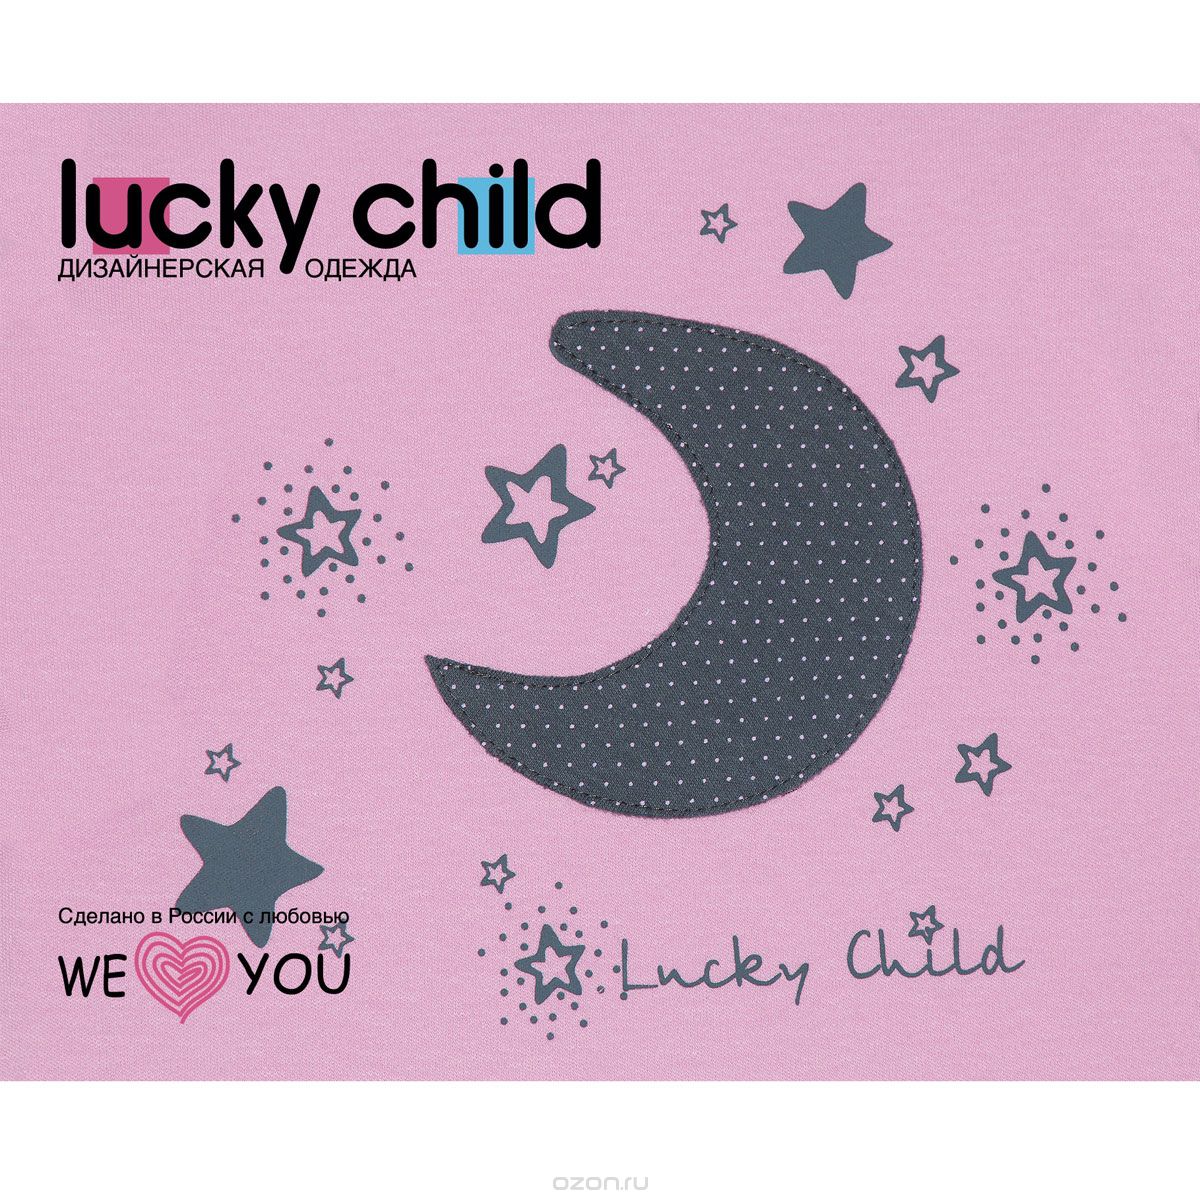    Lucky Child: , , : -, . 12-411.  110/116